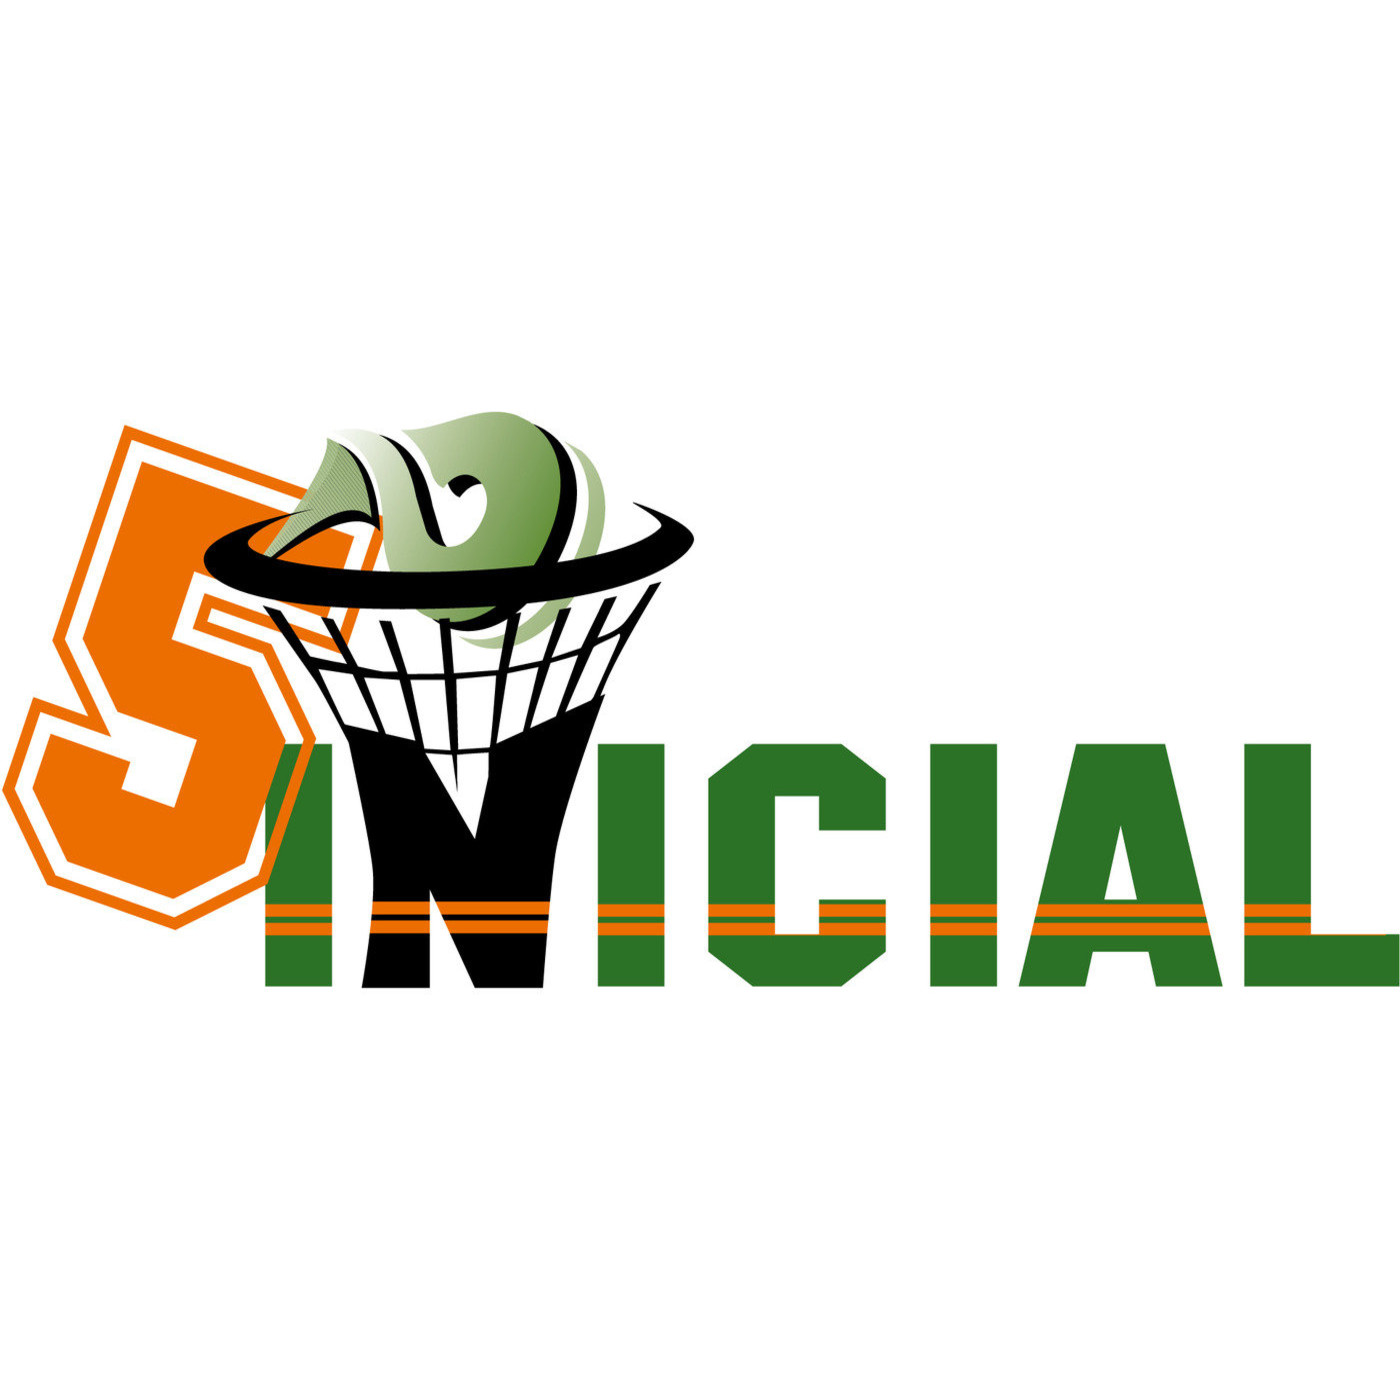 5inicial 05 nov 2013 - Baloncesto in 5 Inicial in mp3(06/11